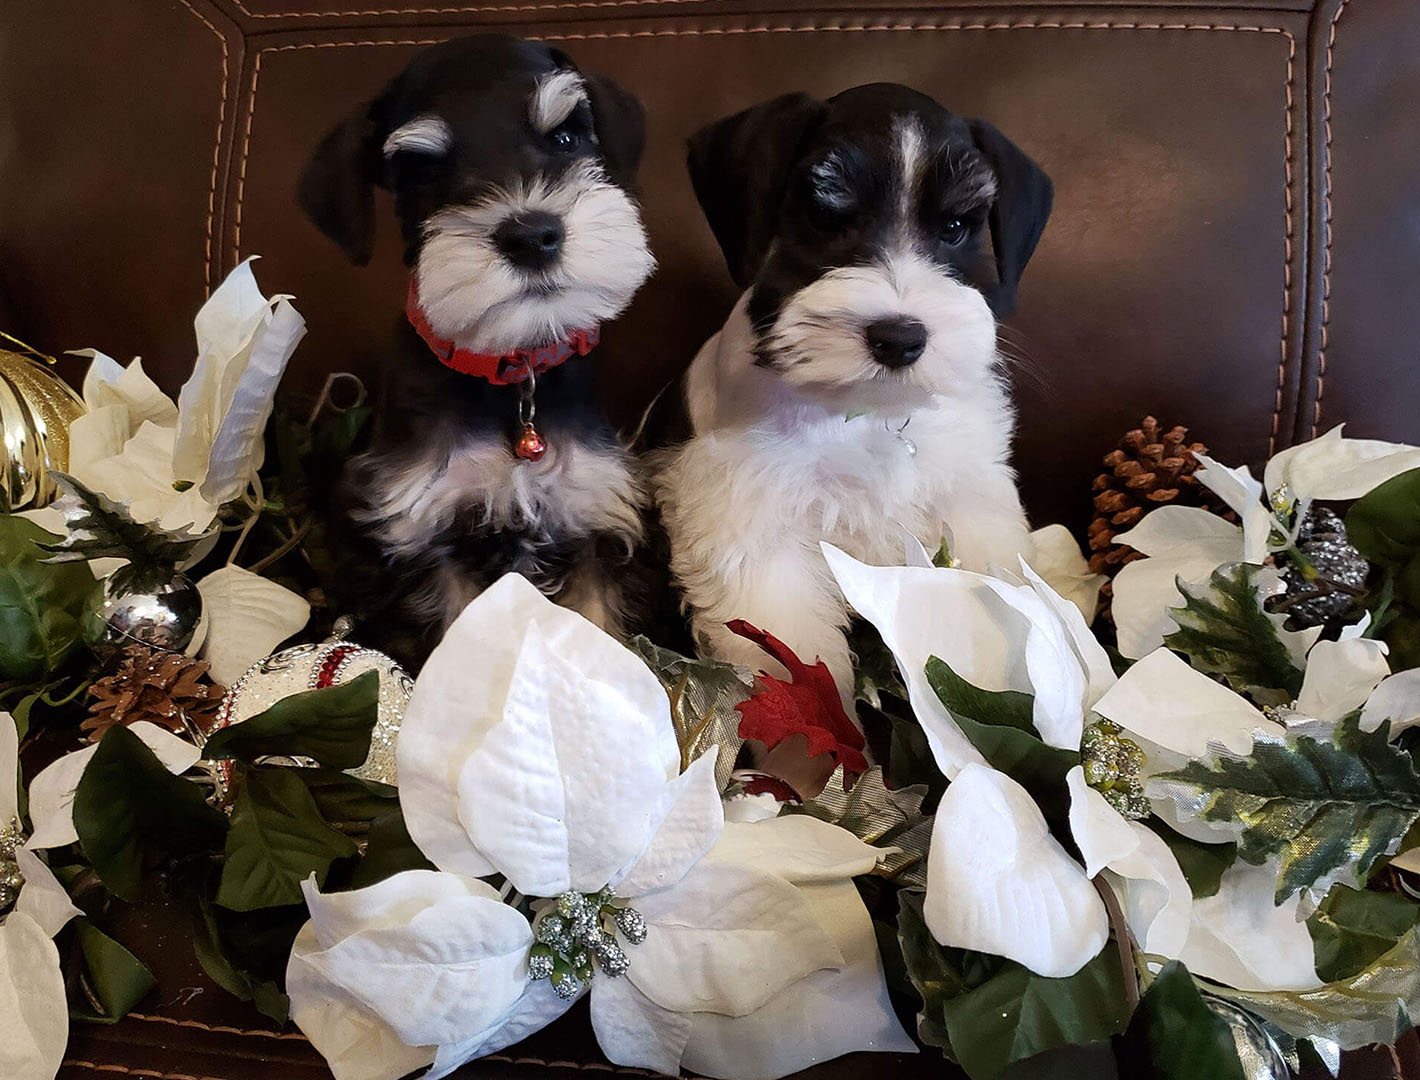 Owasso Miniature Schnauzer Dog Breeder, Miniature Schnauzer Puppies for Sale and Miniature Schnauzer Dogs for Sale